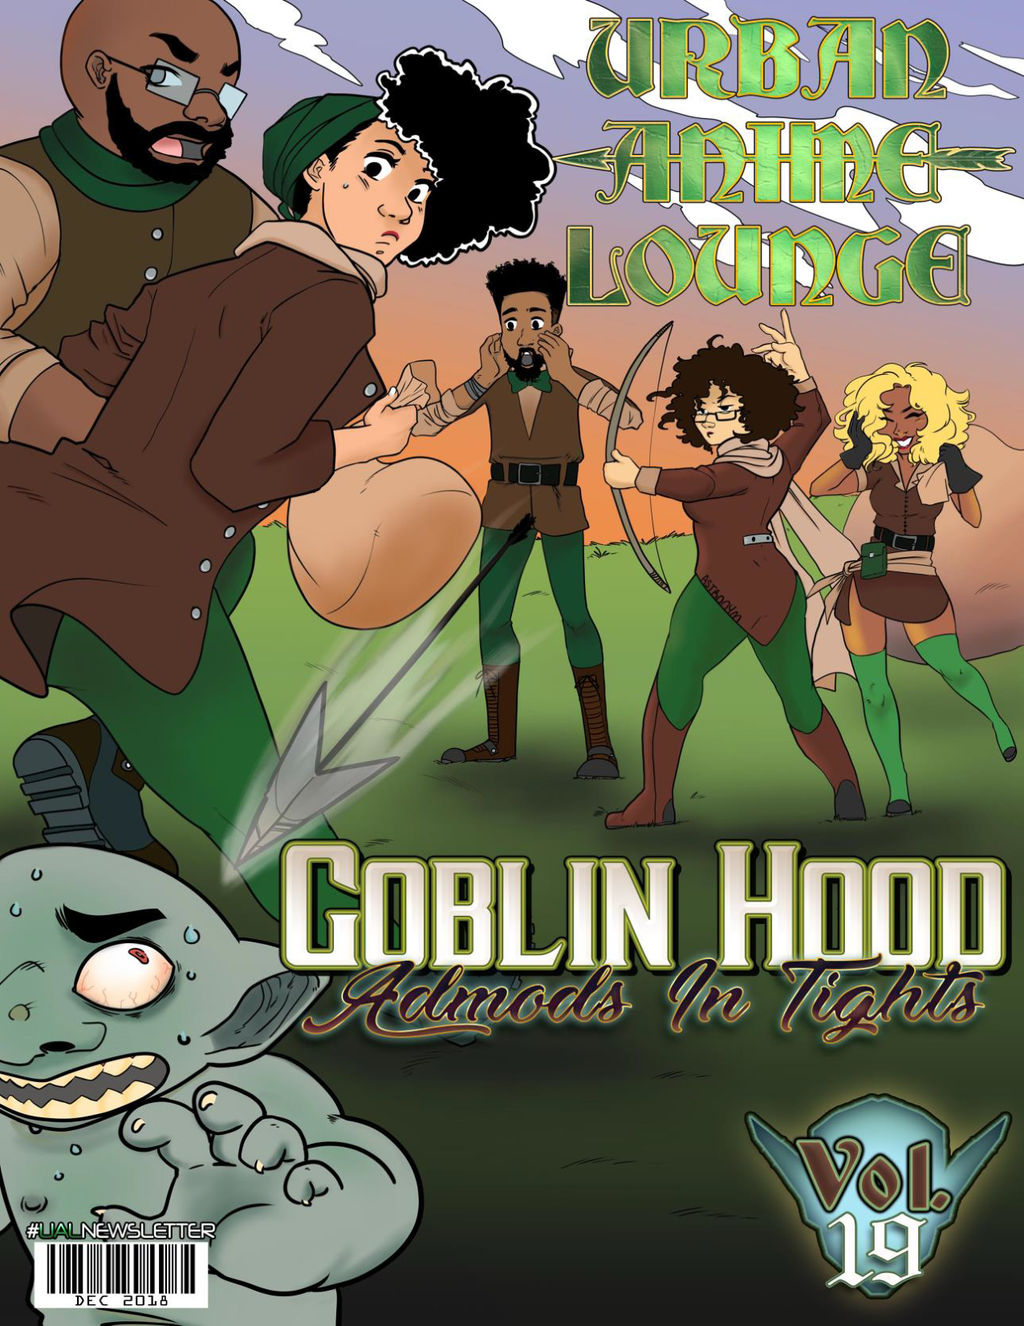 Urban Anime Lounge: Newsletter Volume 19- Goblin Hood: Admods in Tights